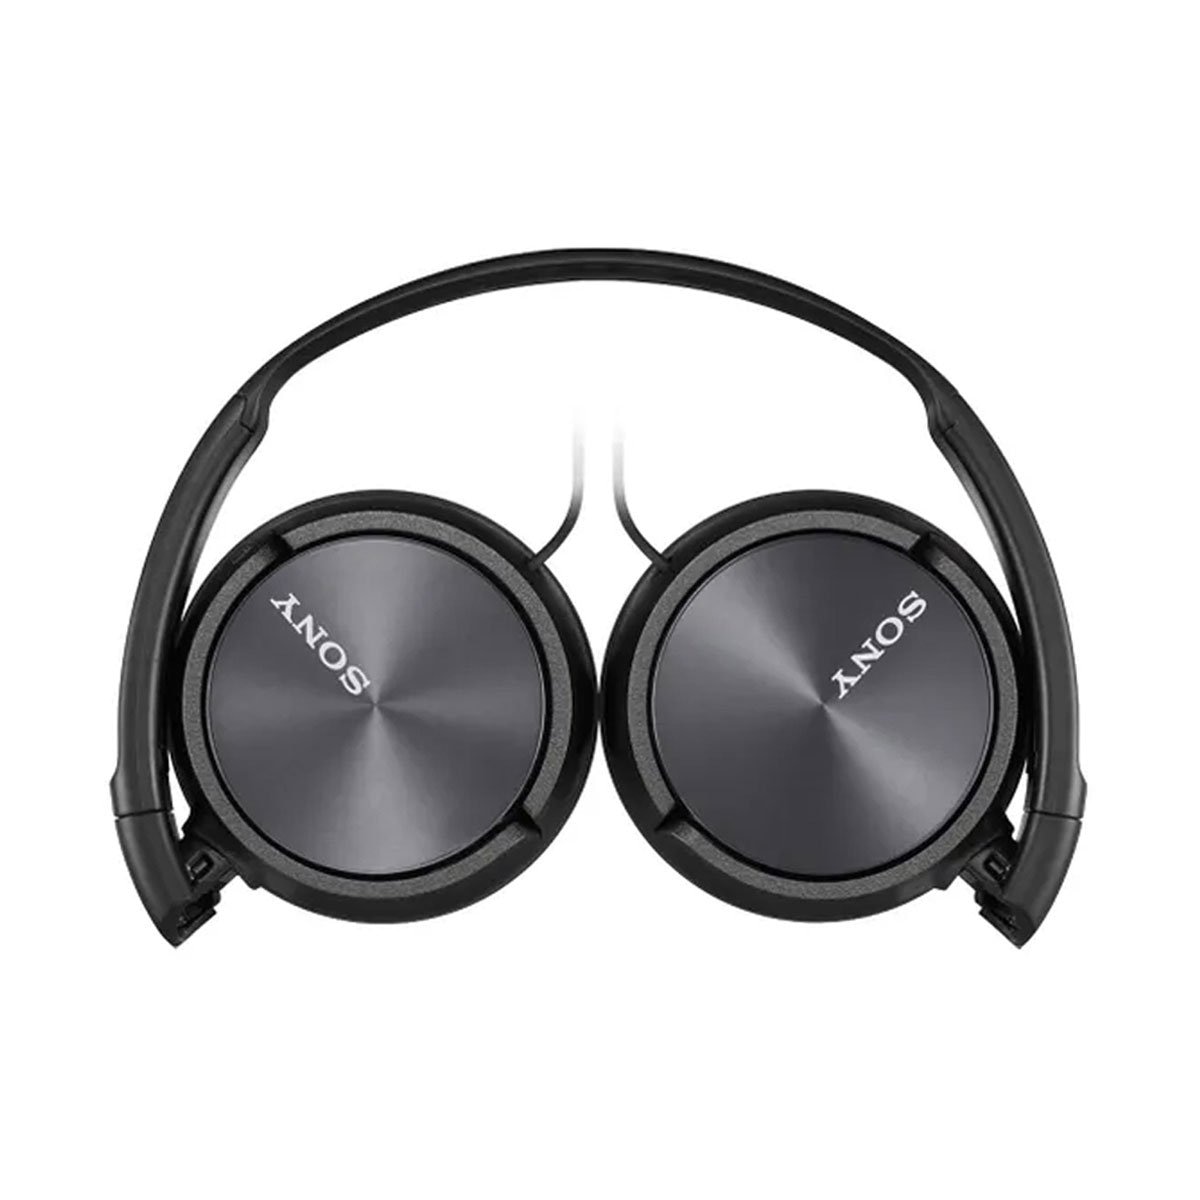 Audífonos Plegables Mdr-Zx310 Negro Sony